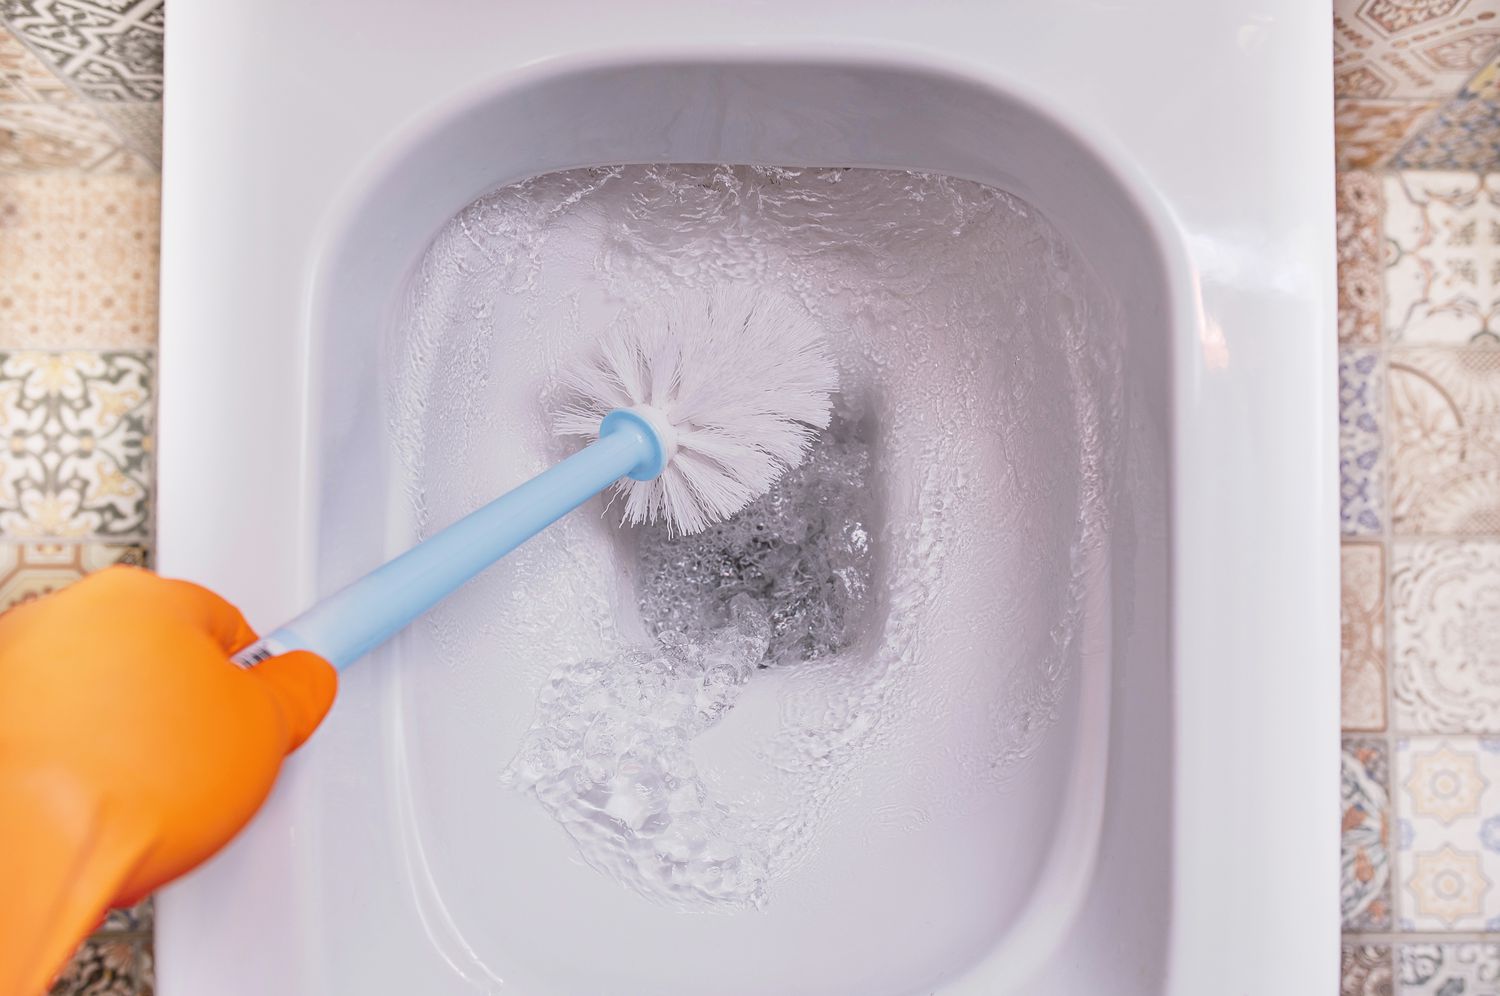 Toilet bowl brush being used to scrub a toilet